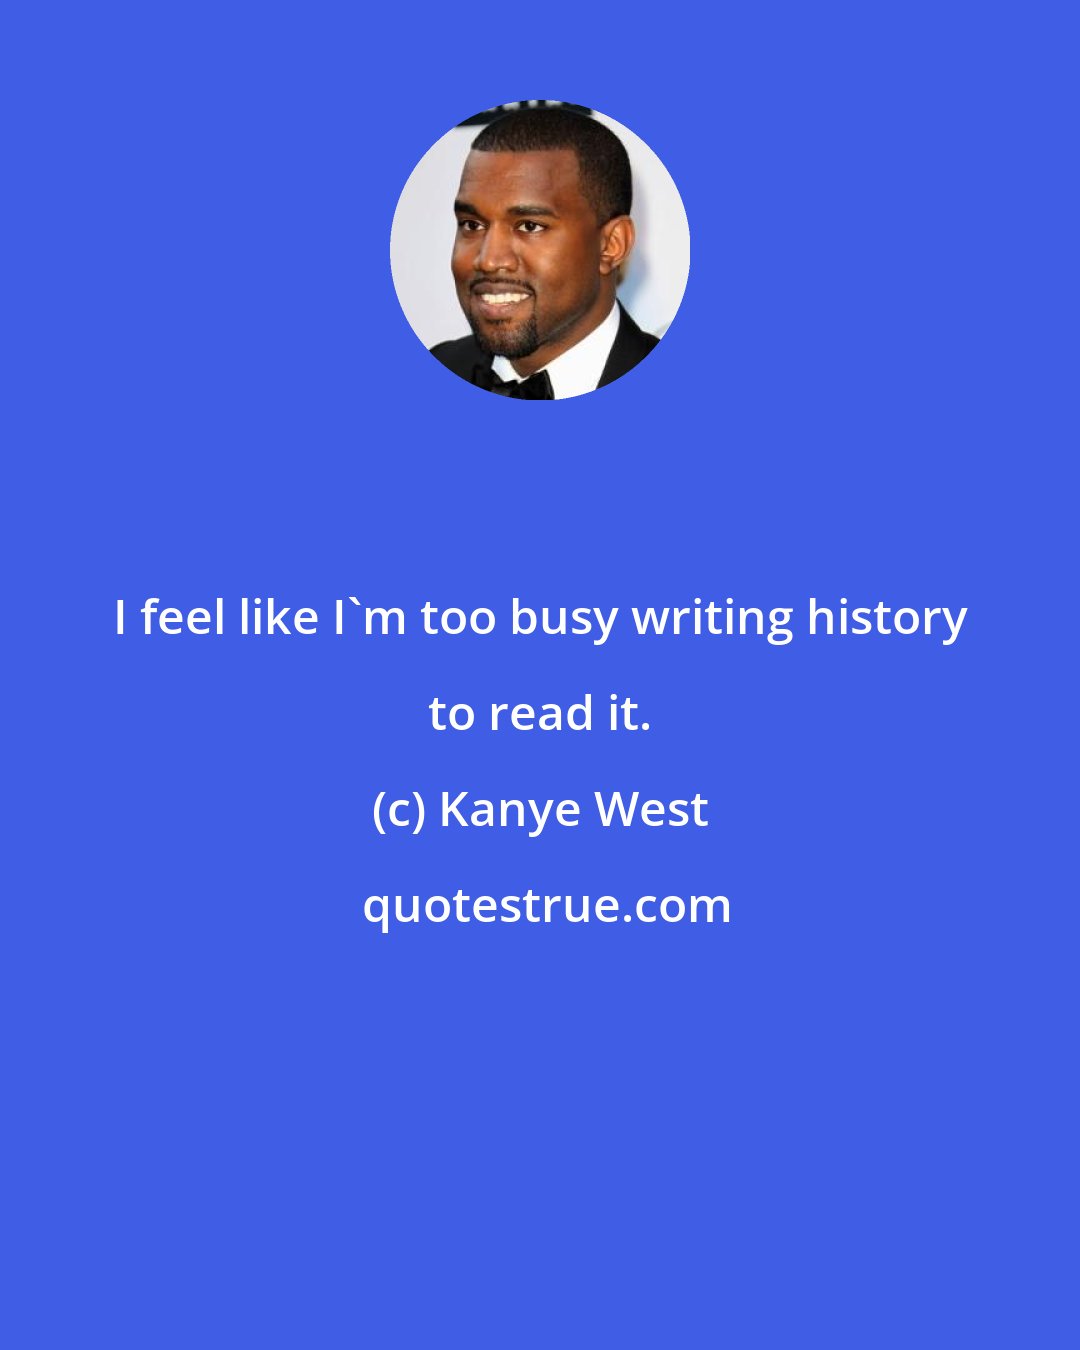 Kanye West: I feel like I'm too busy writing history to read it.